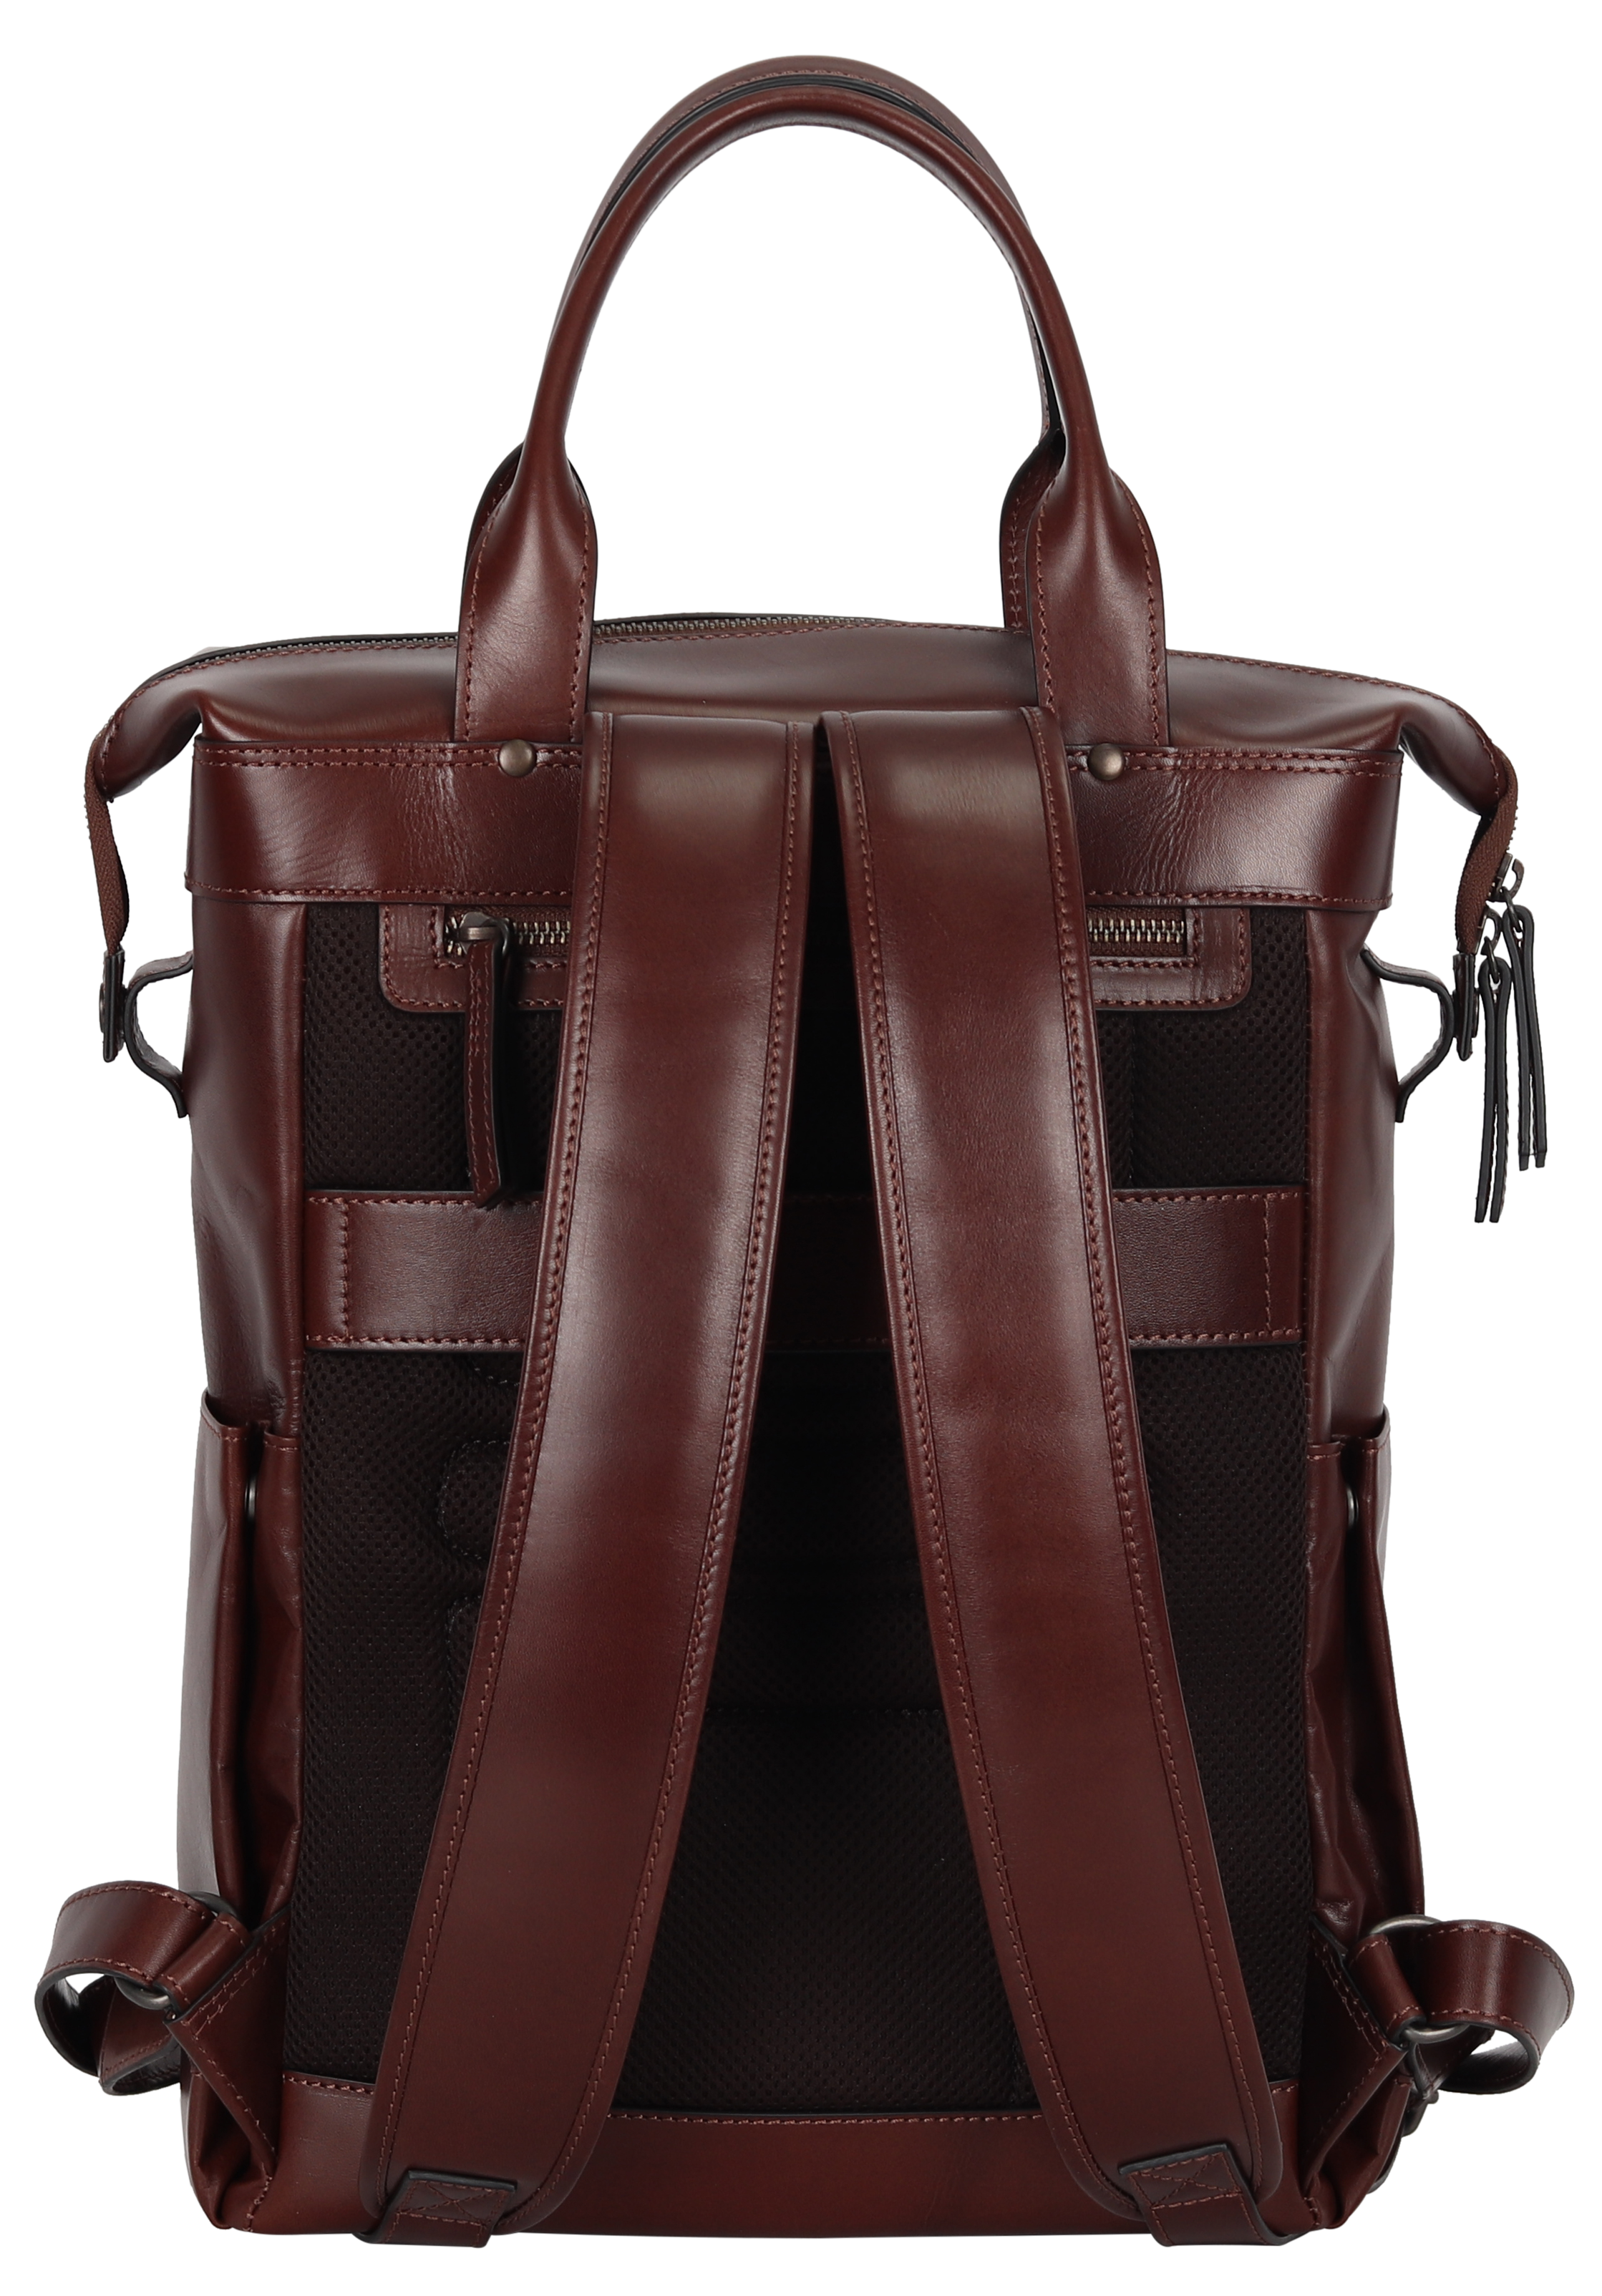 BOL Waxy Leather 2 Handle Backpack